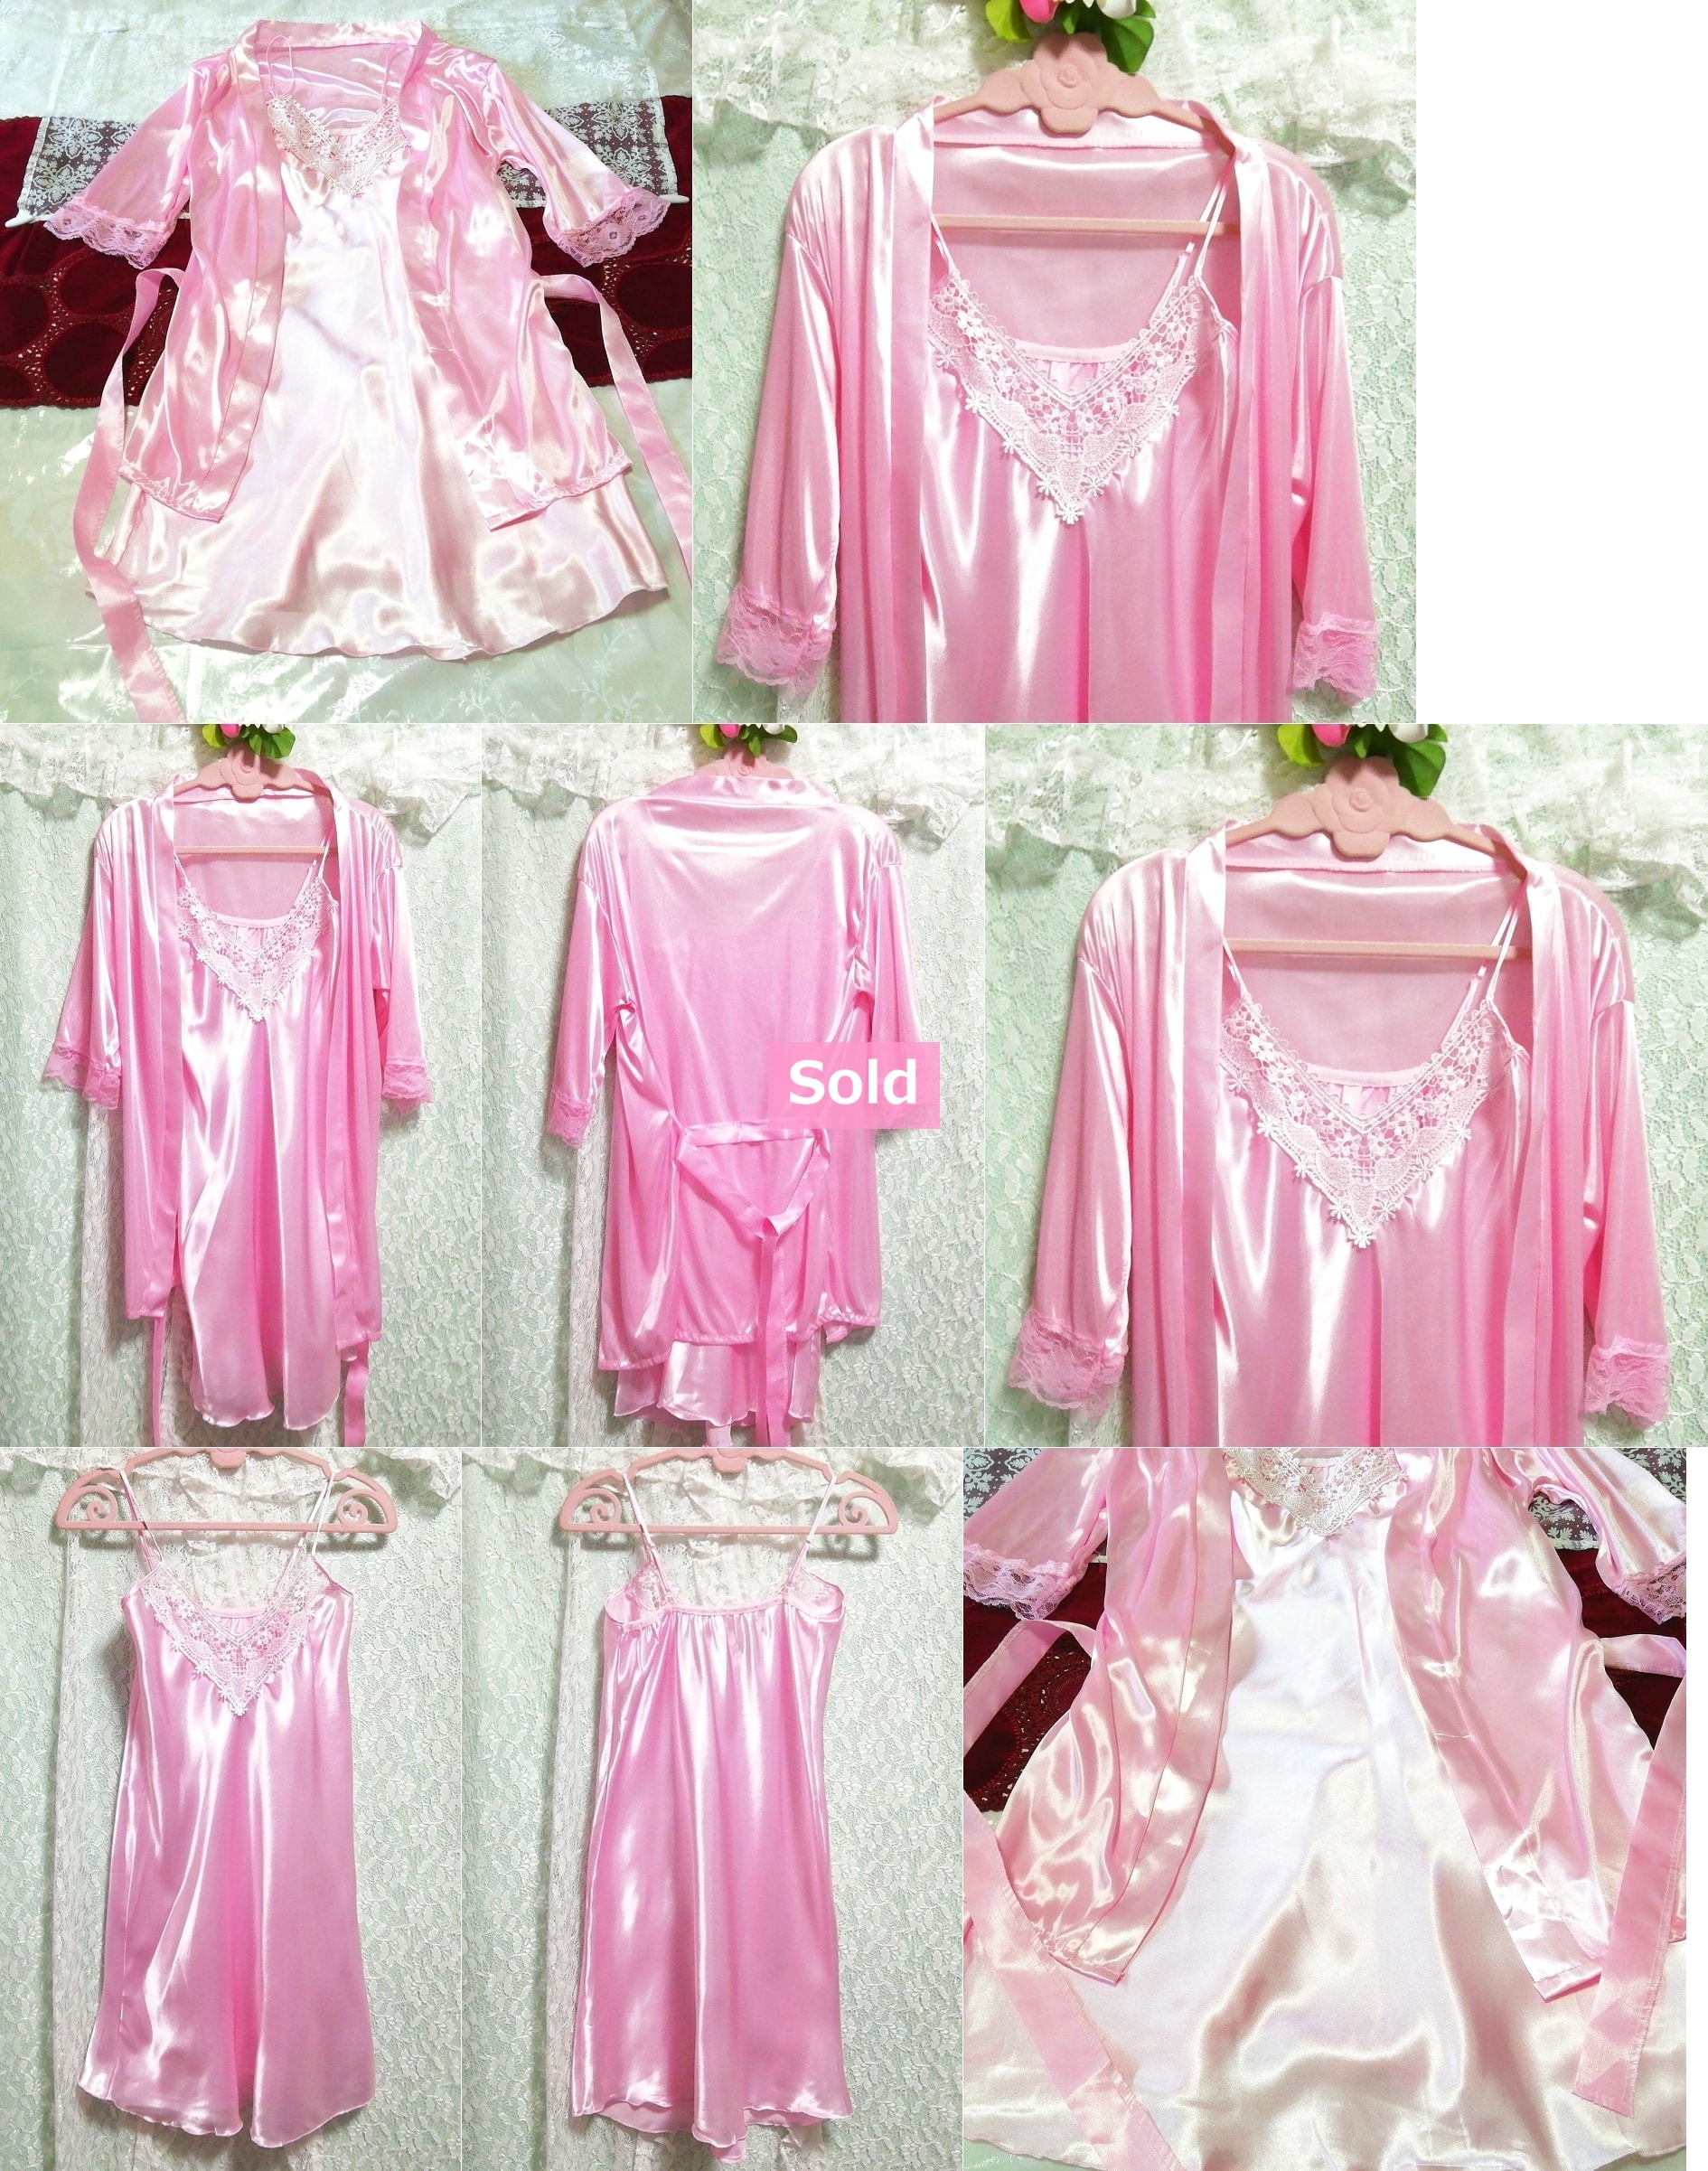 Robe haori en satin rose, chemise de nuit, camisole, robe babydoll 2P, mode, mode féminine, vêtement de nuit, pyjamas